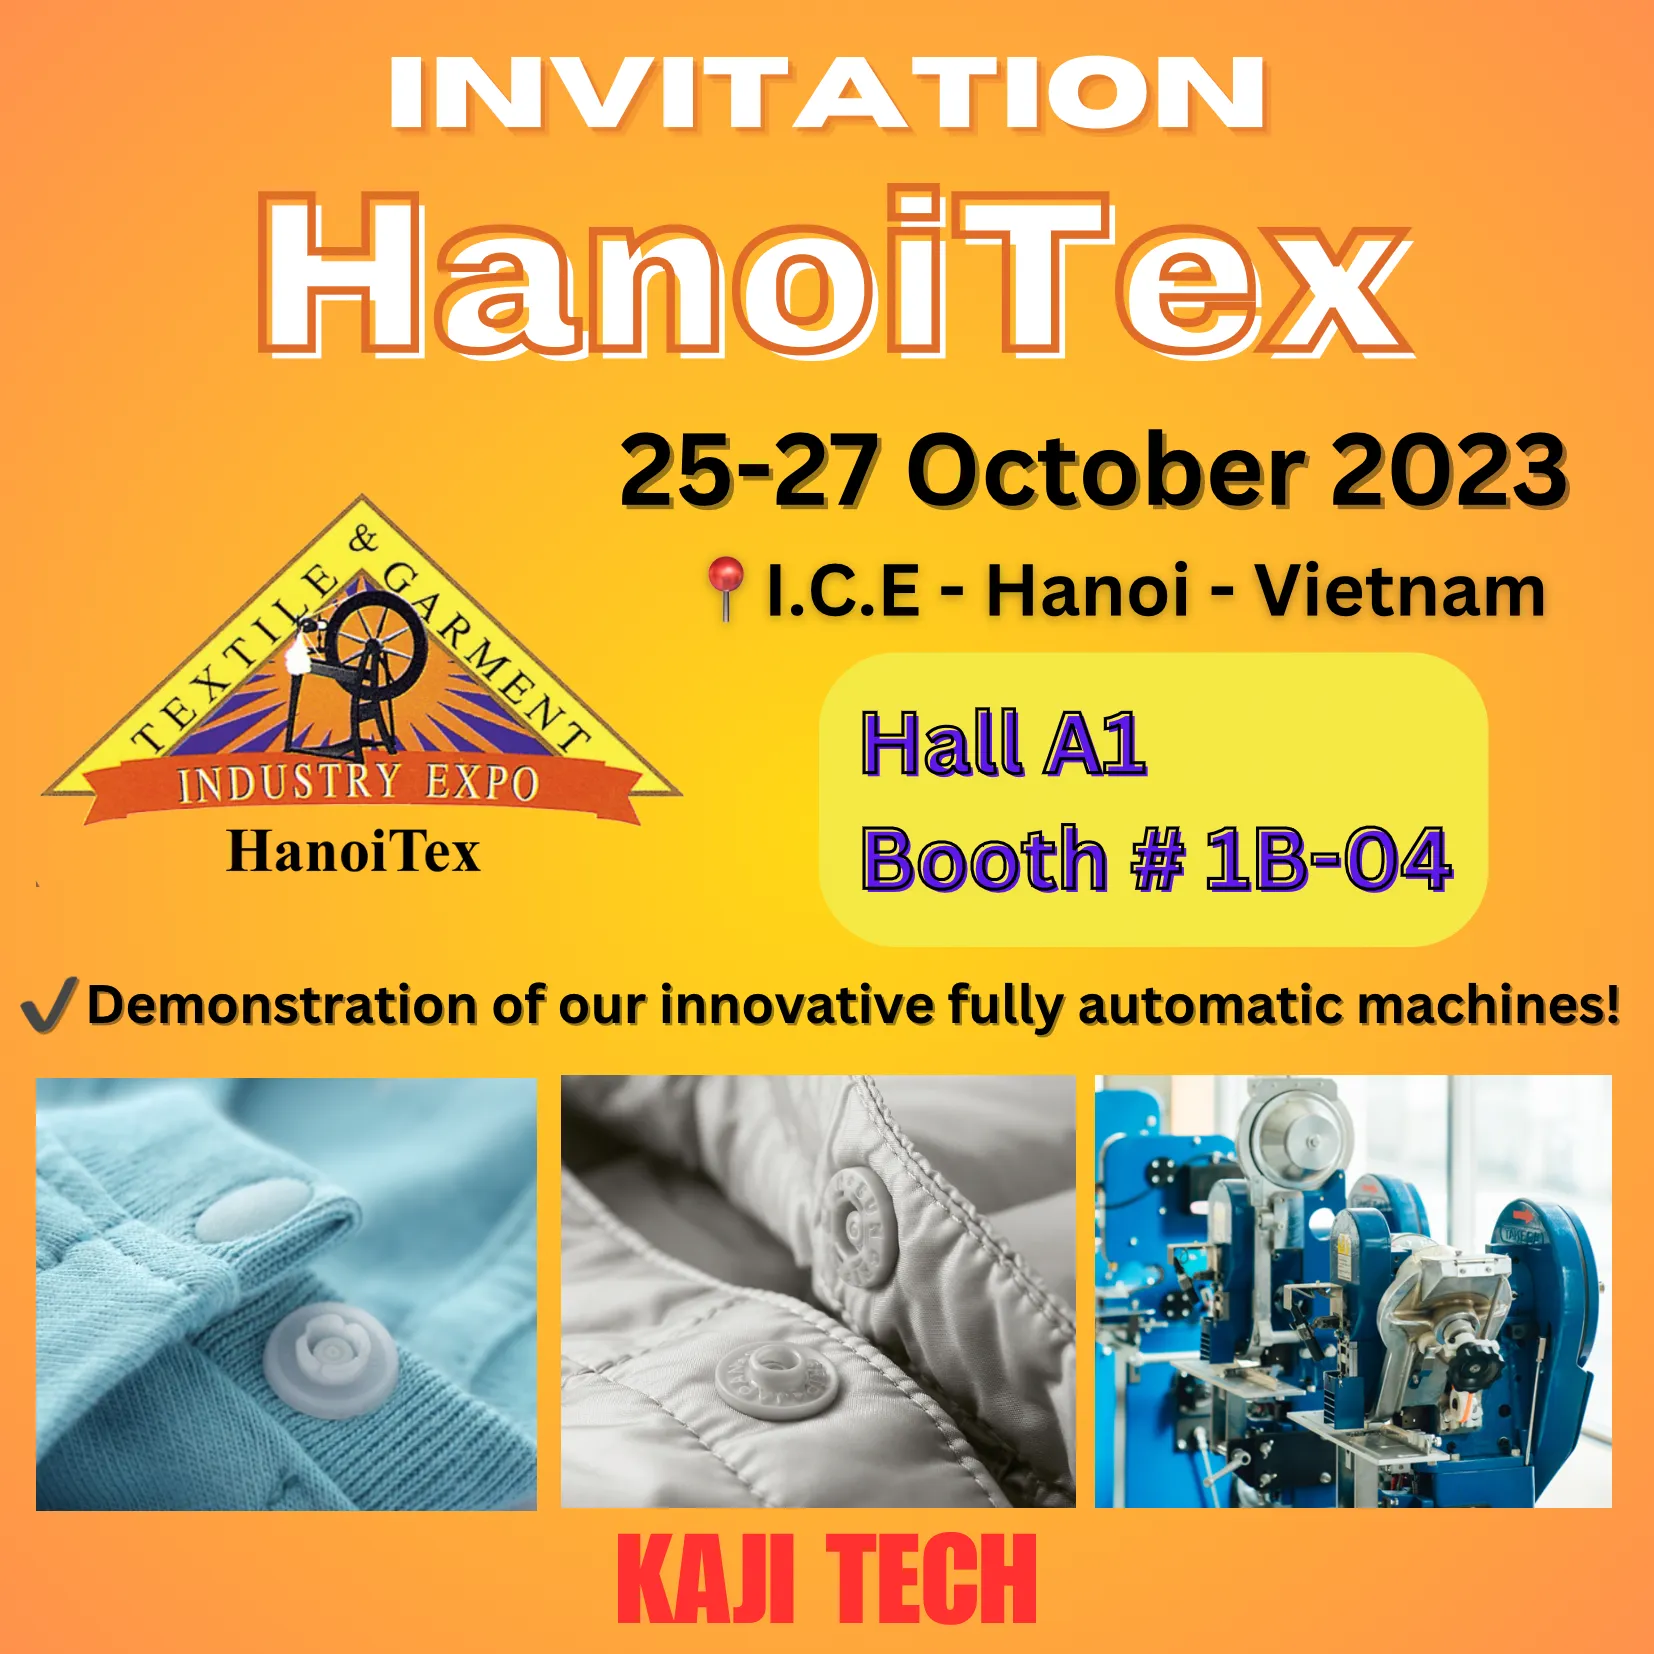 Hanoi Tex 2023